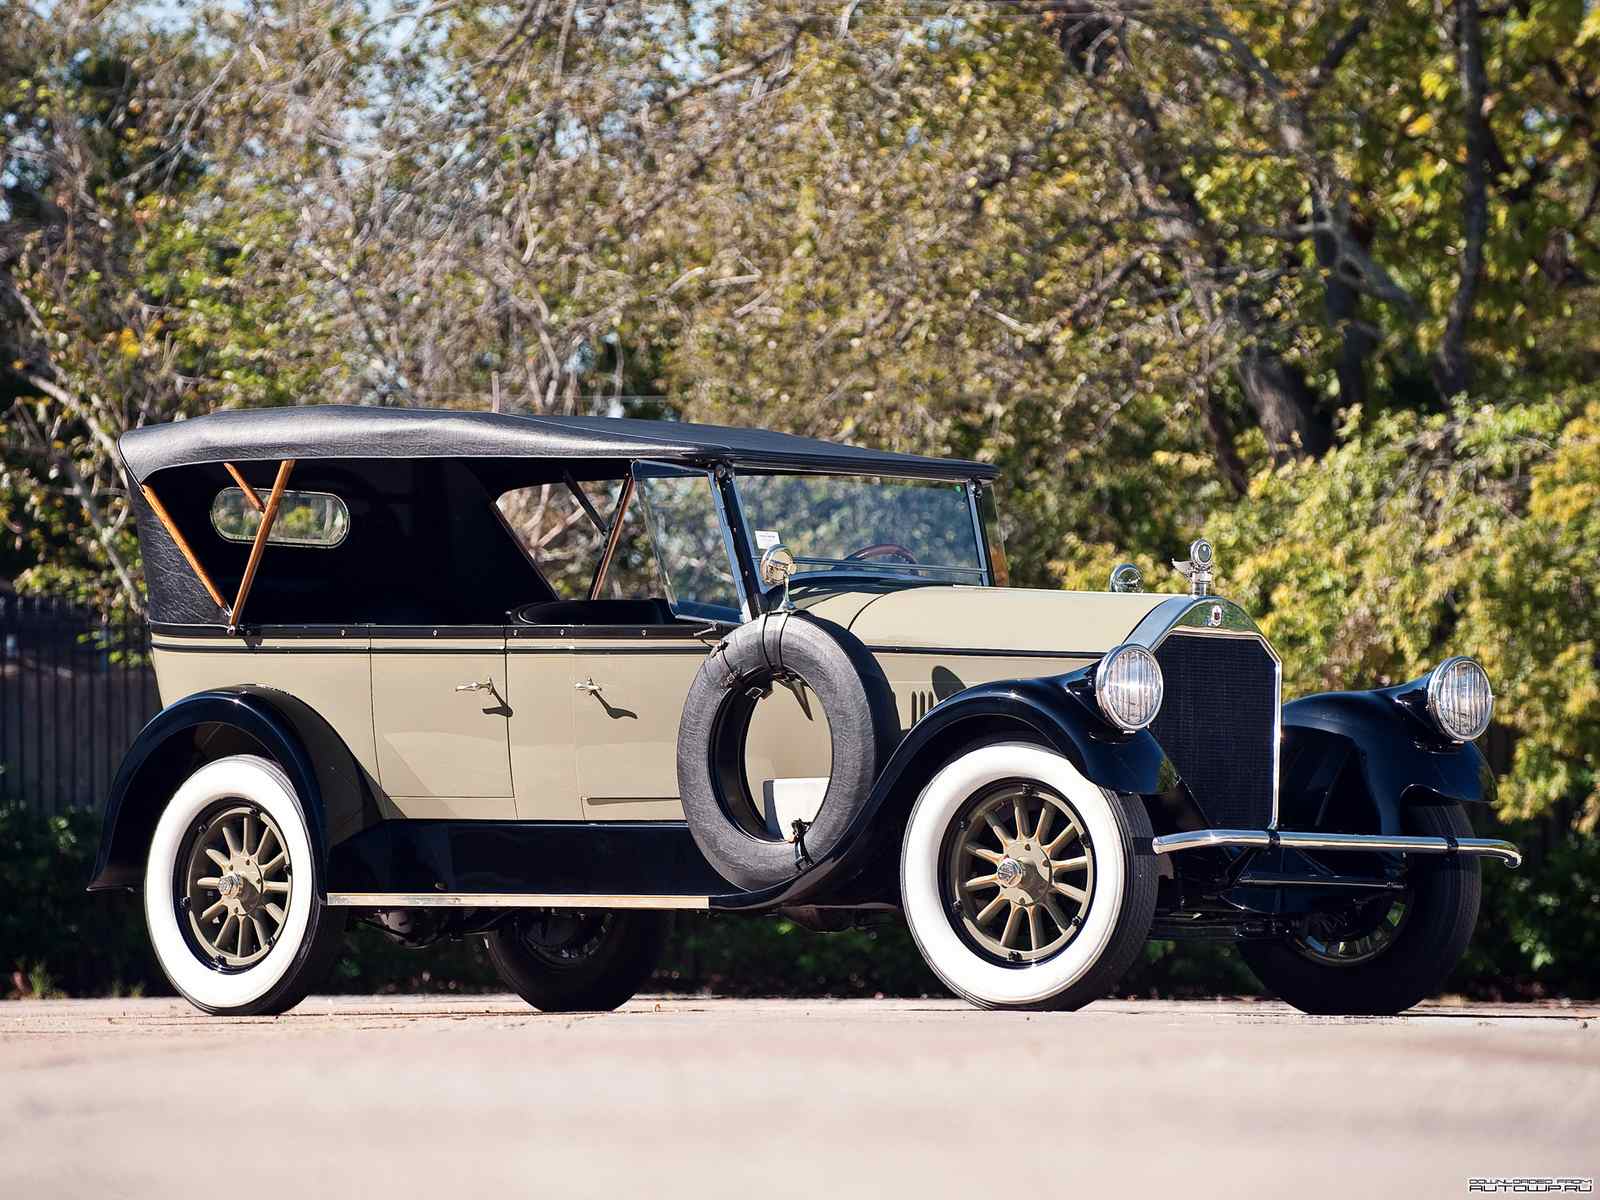 1928. Pierce-Arrow Model 36 7-passenger Touring